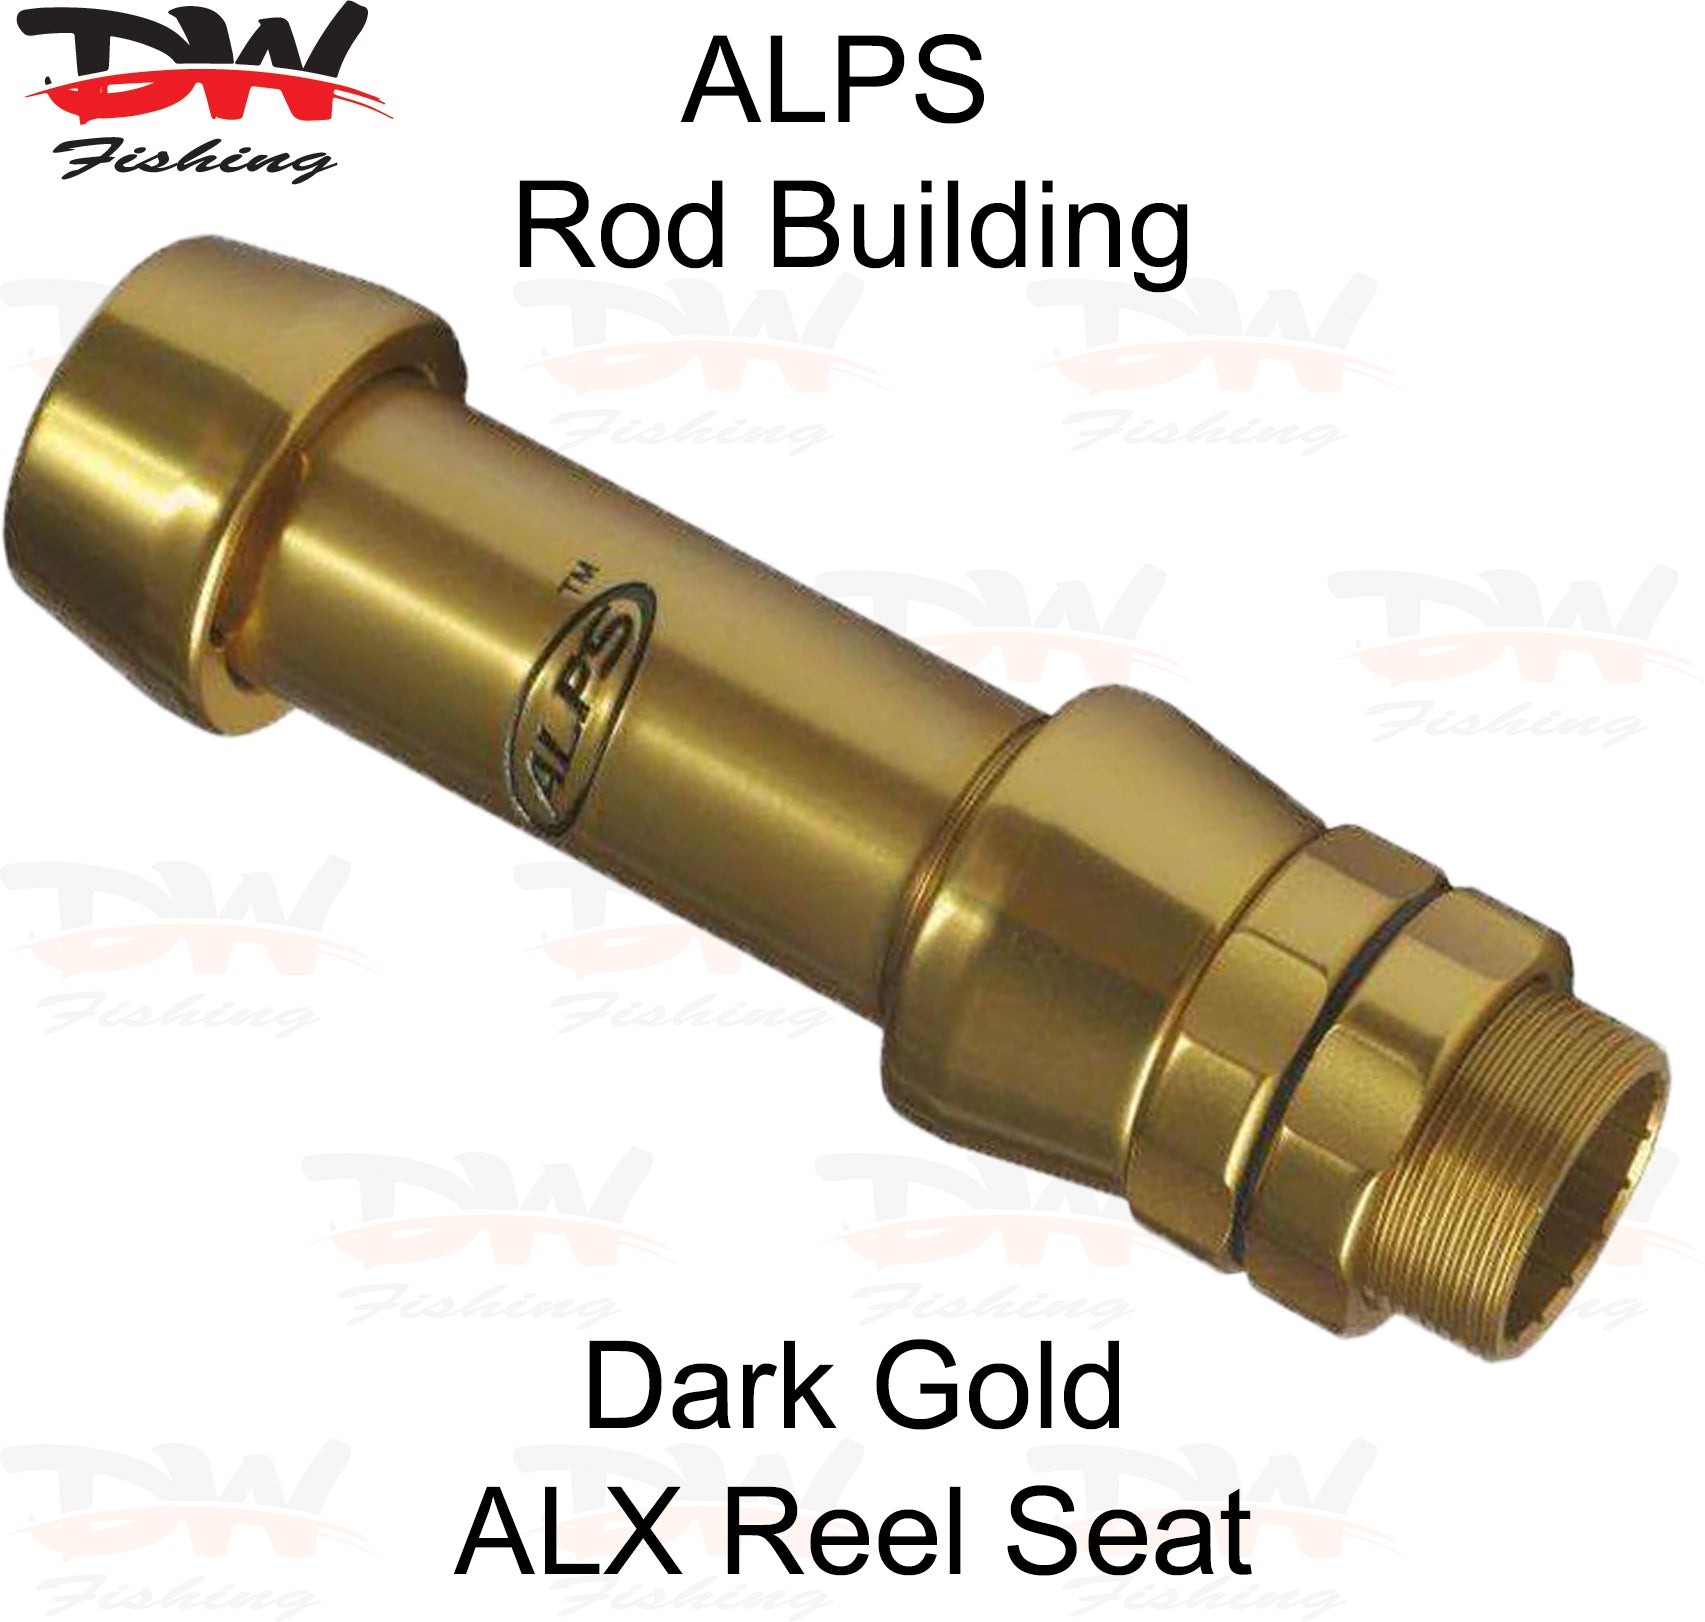 ALPS ALX Alloy Reel seat dark gold colour salt water reel seat